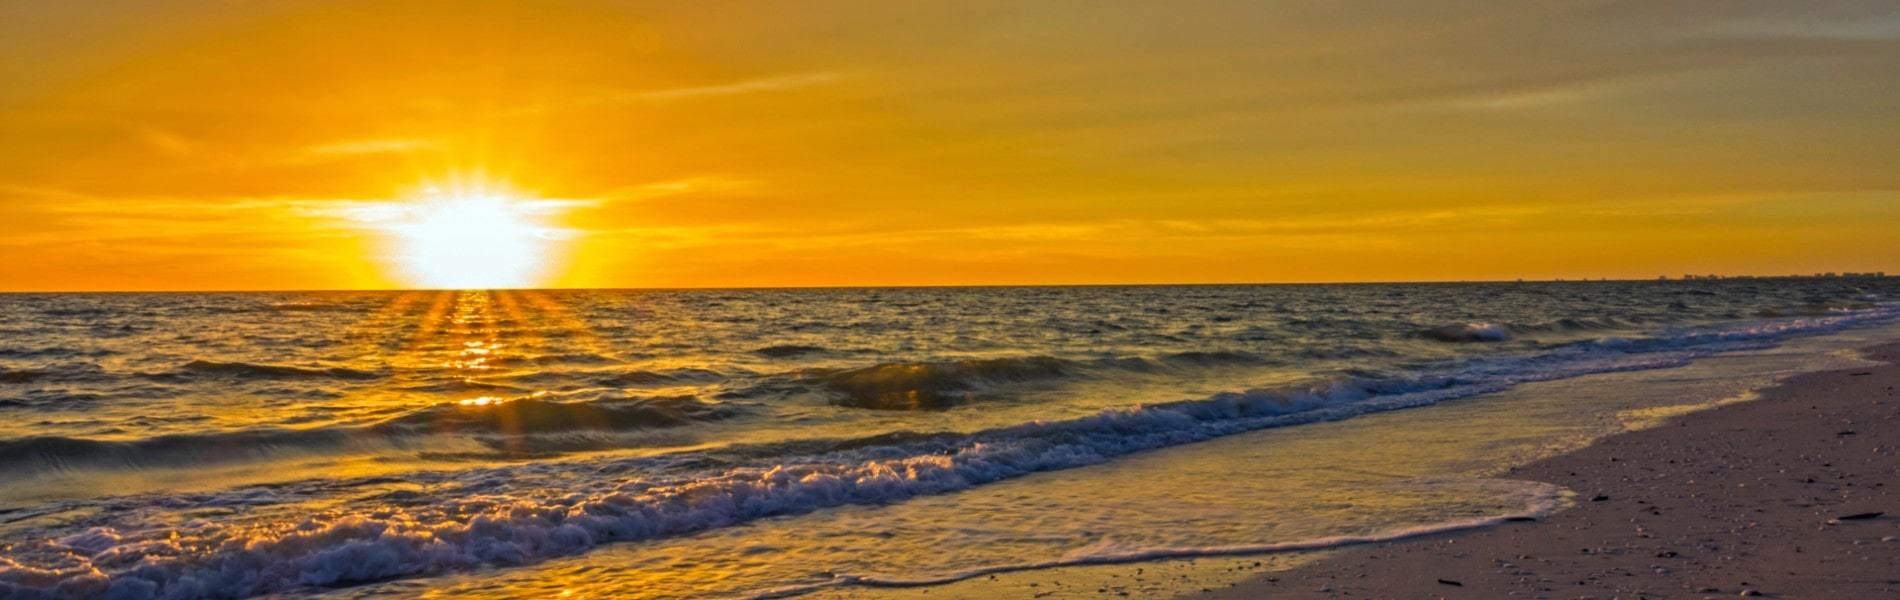 beautiful sunset over a florida beach, near bonita springs